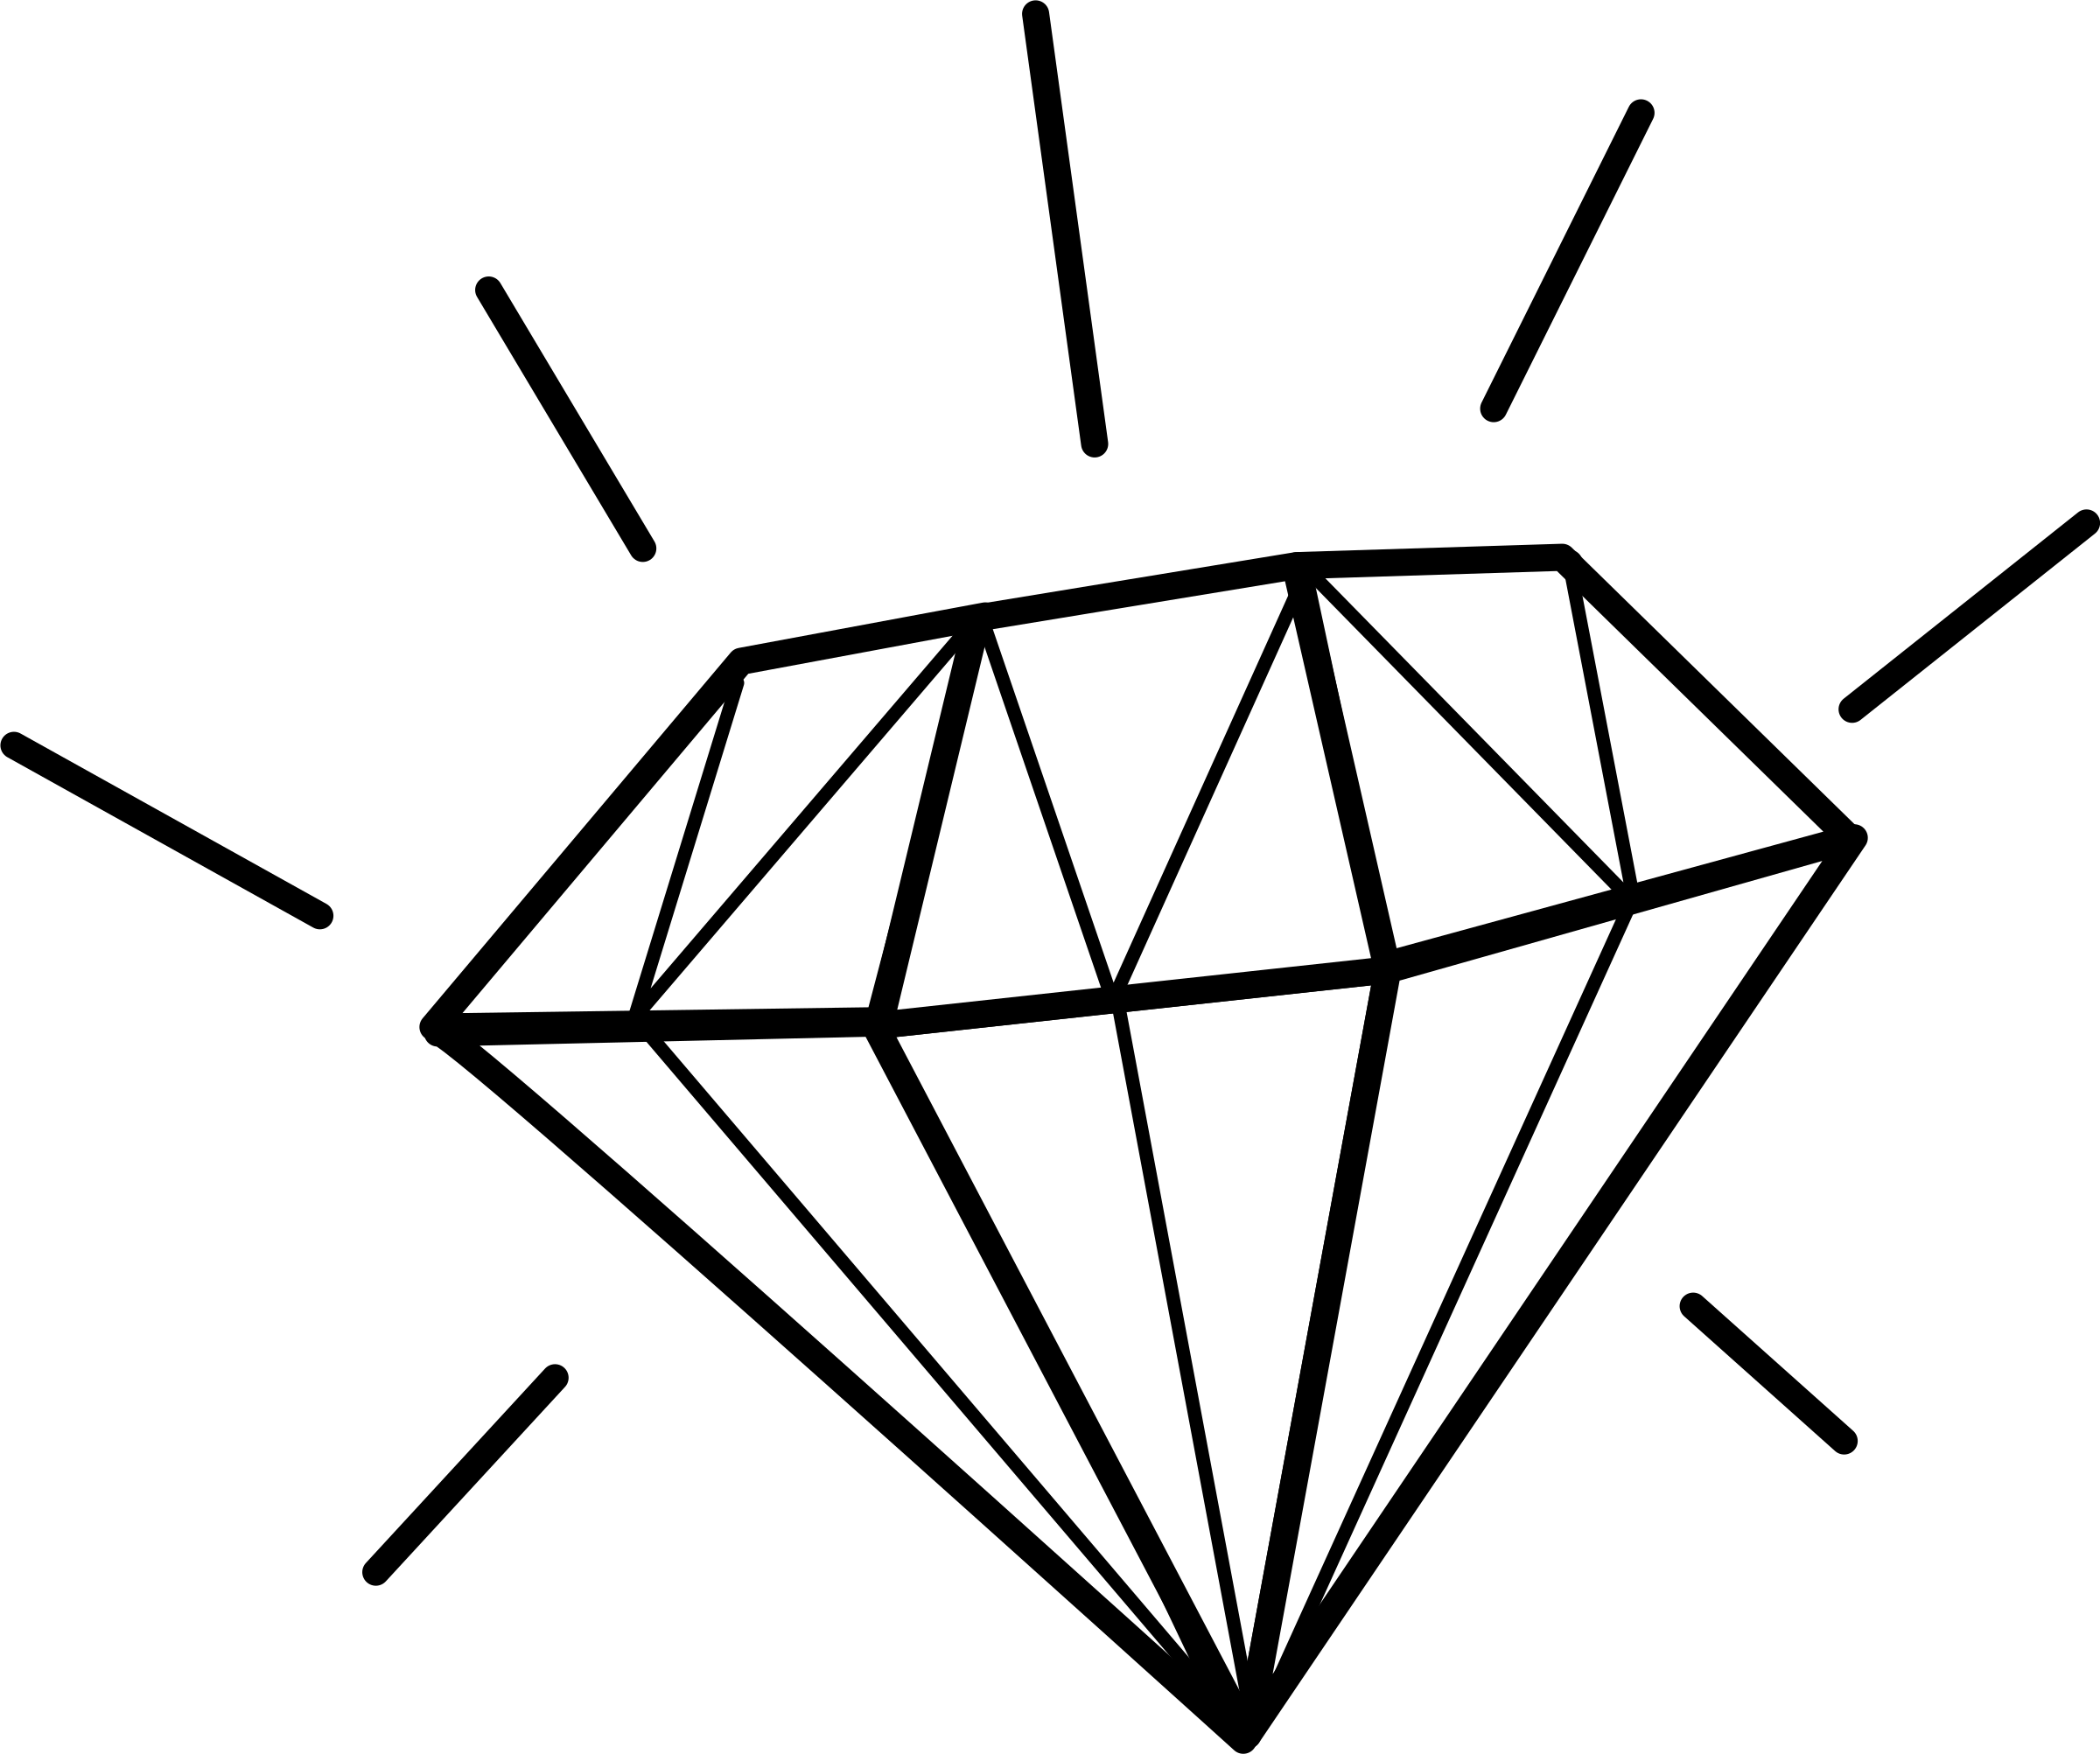 Top clip art photos. Clipart diamond diamond outline